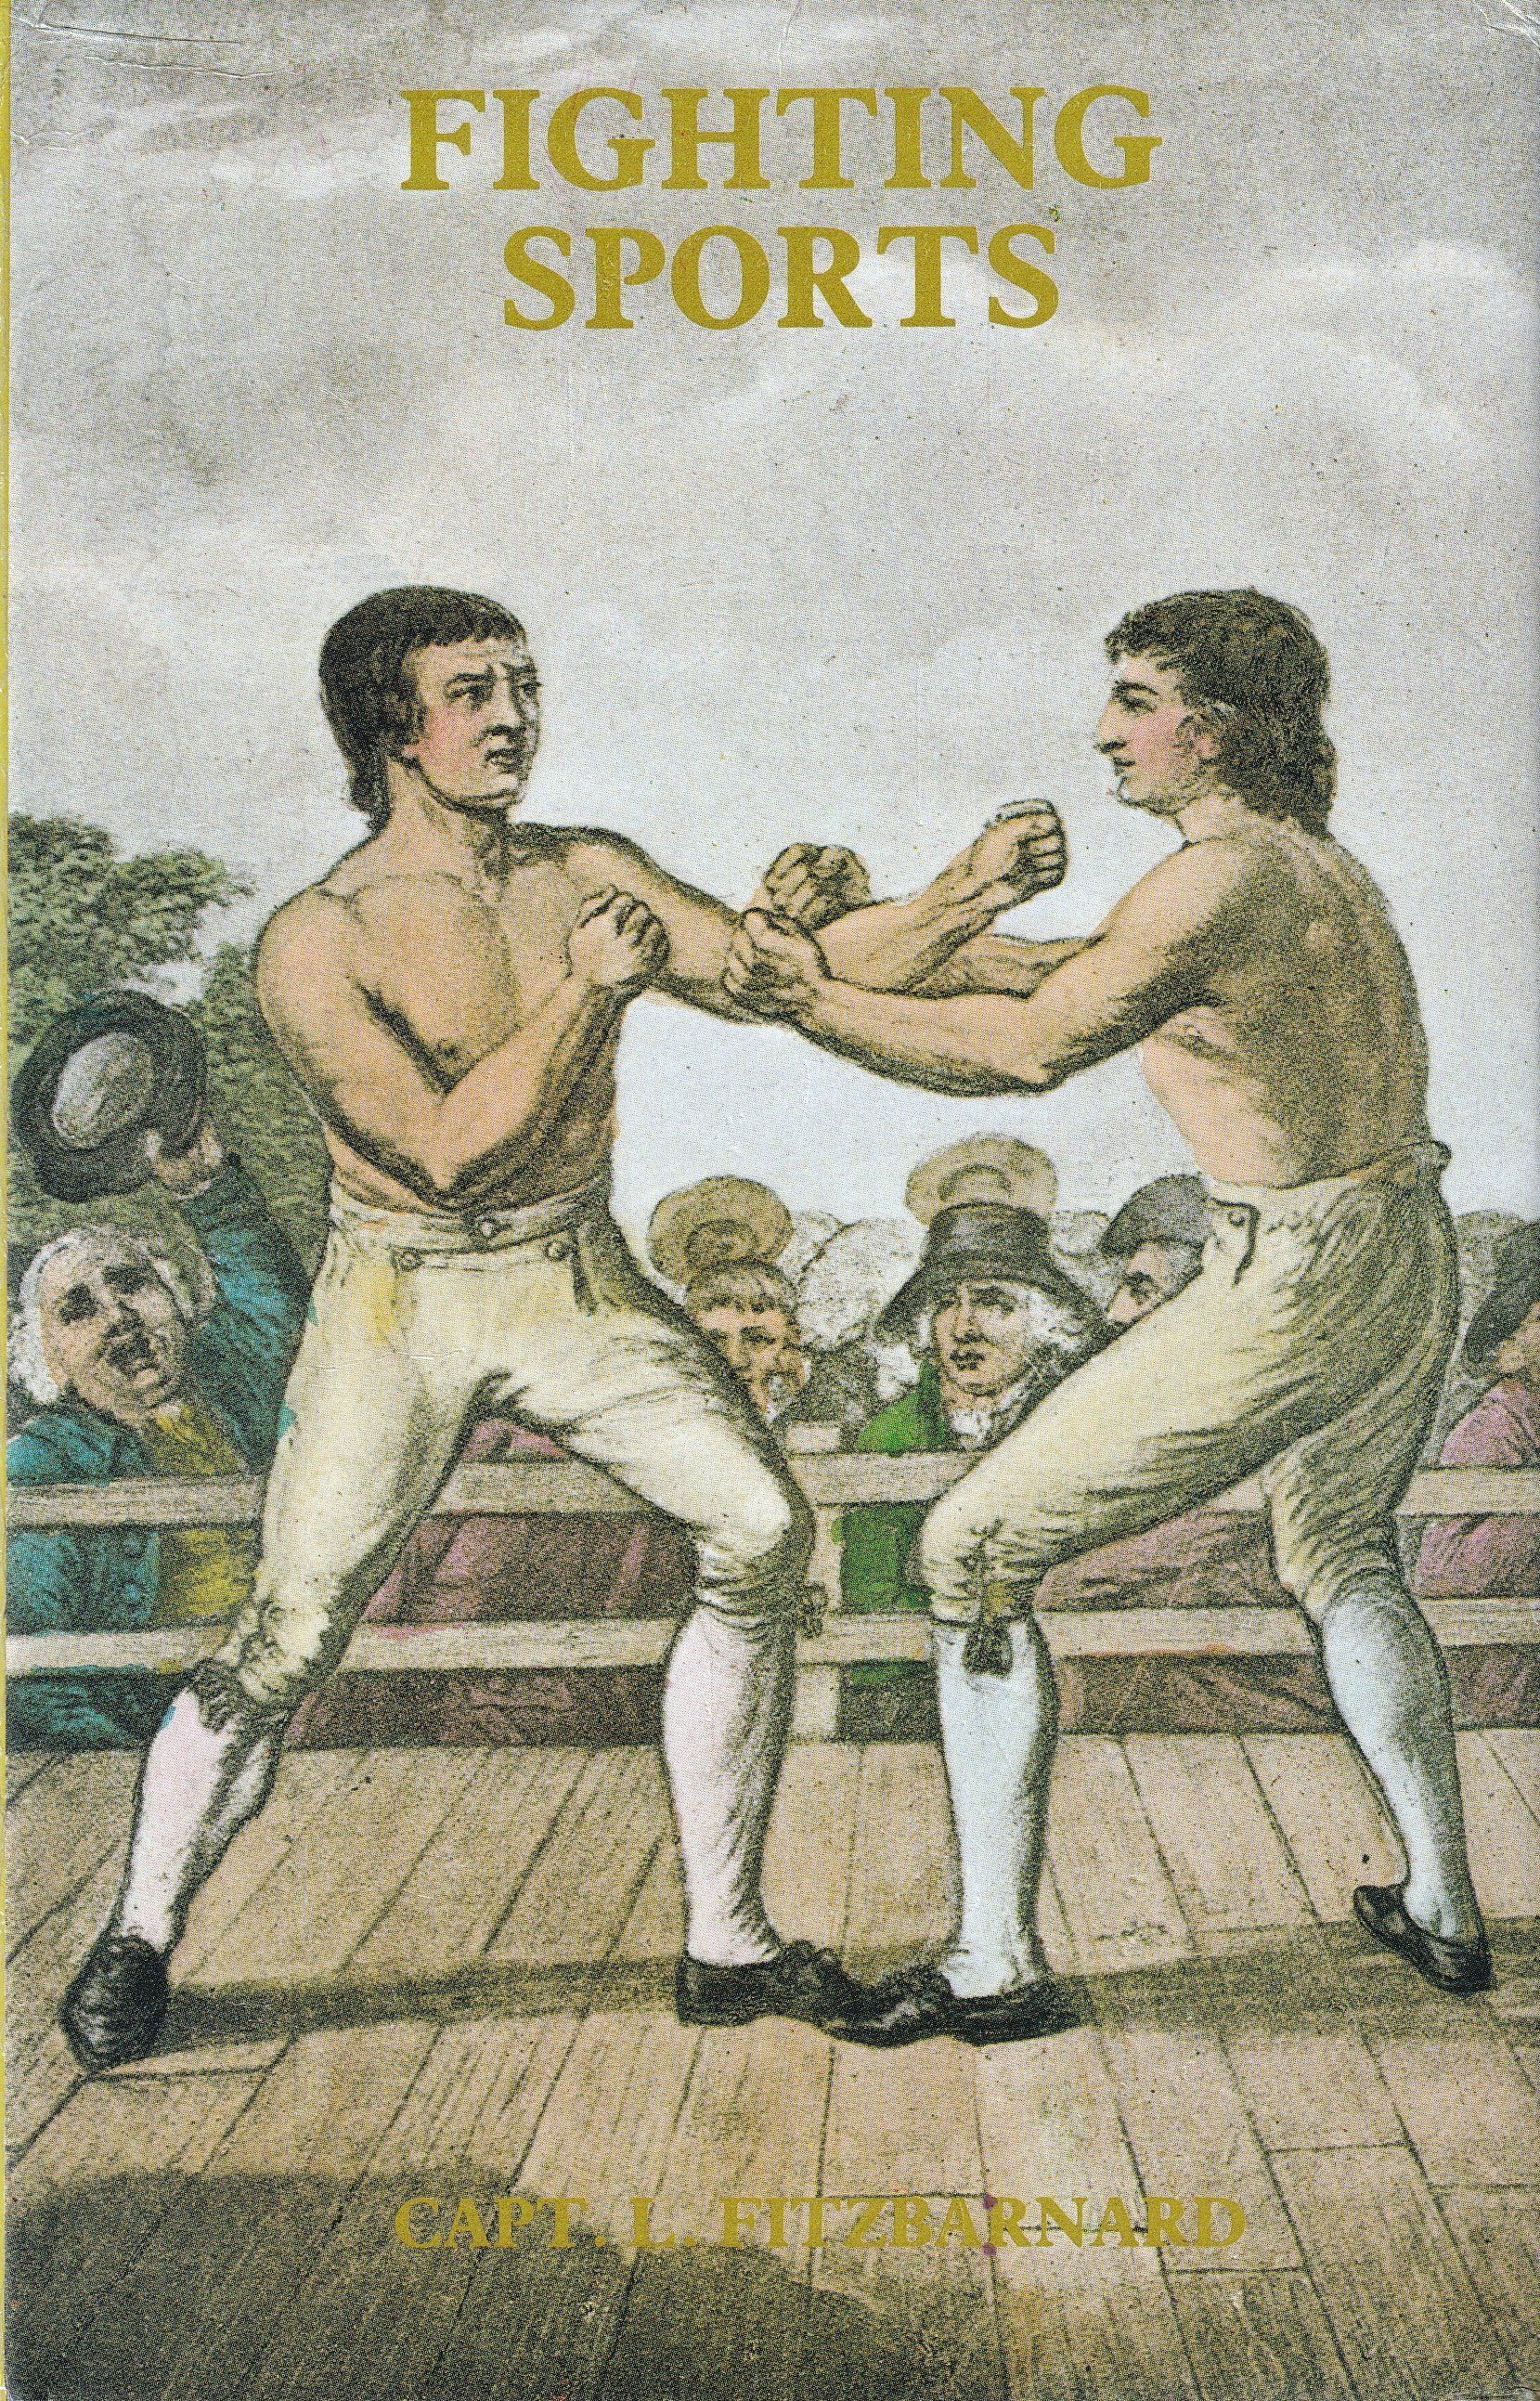 Fighting Sports by Capt. L Fitzbarnard